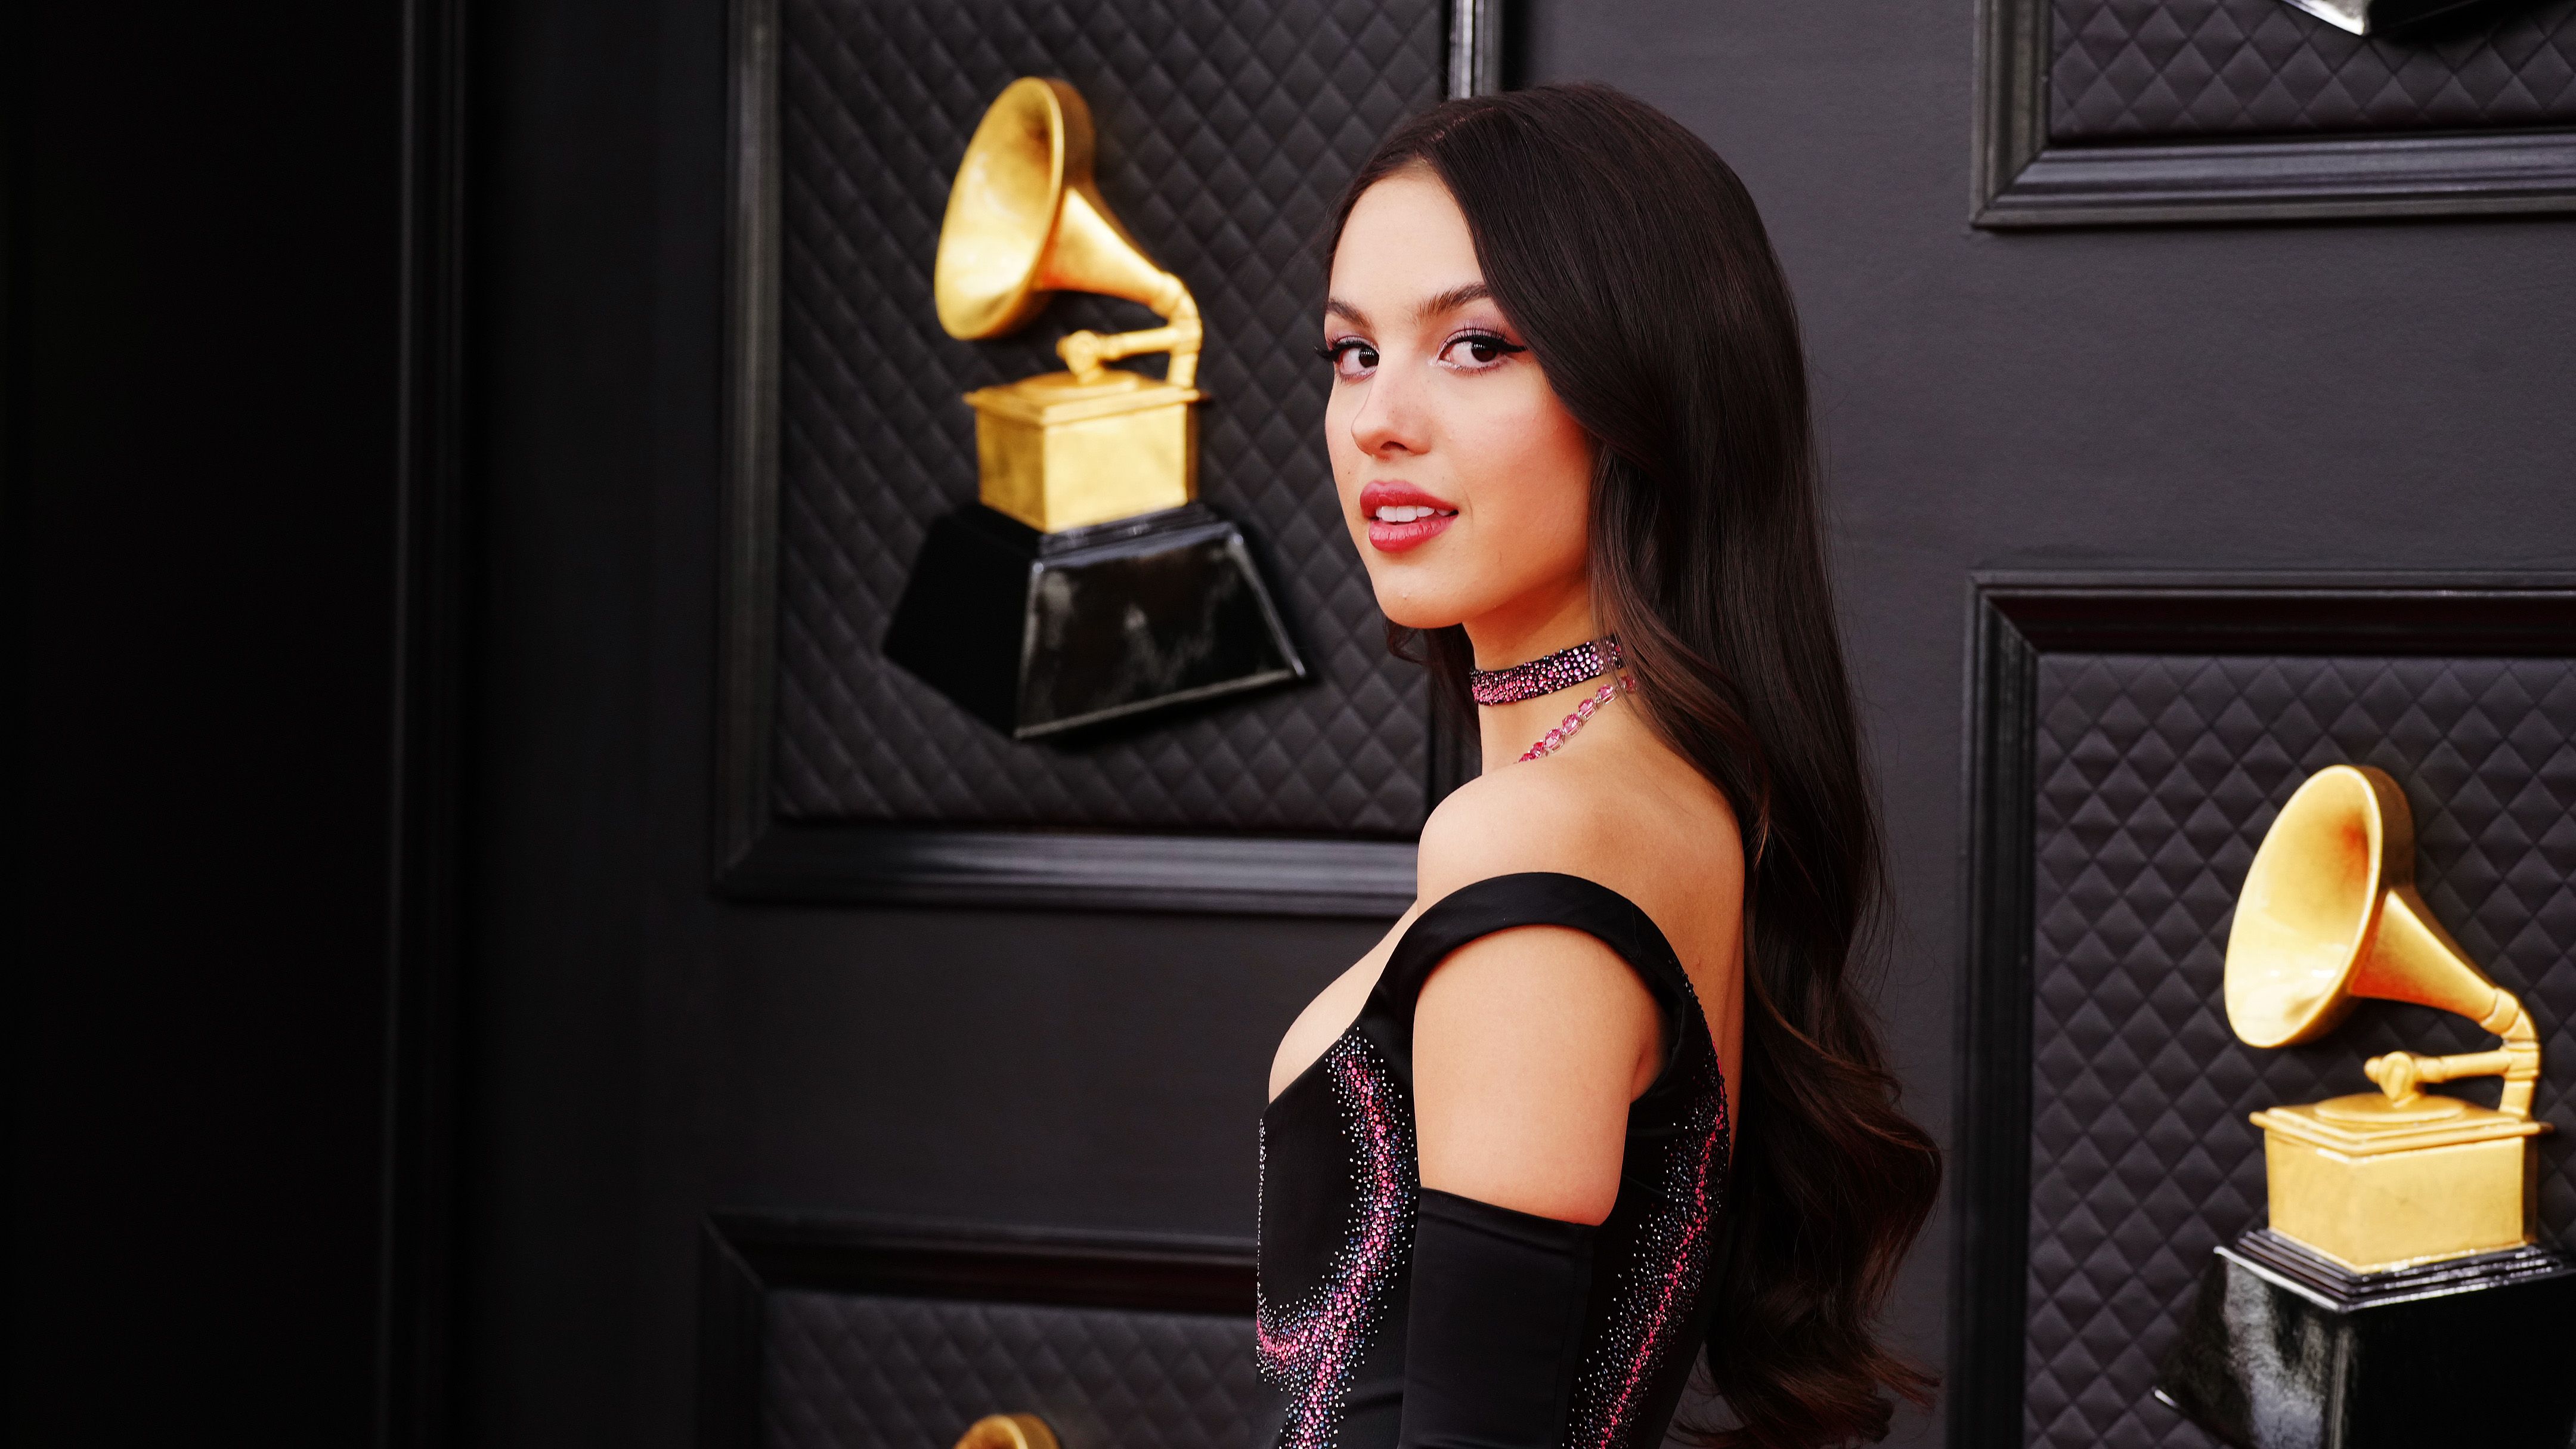 Grammys 2022: Olivia Rodrigo Makes a Cameo in BTS' Performance